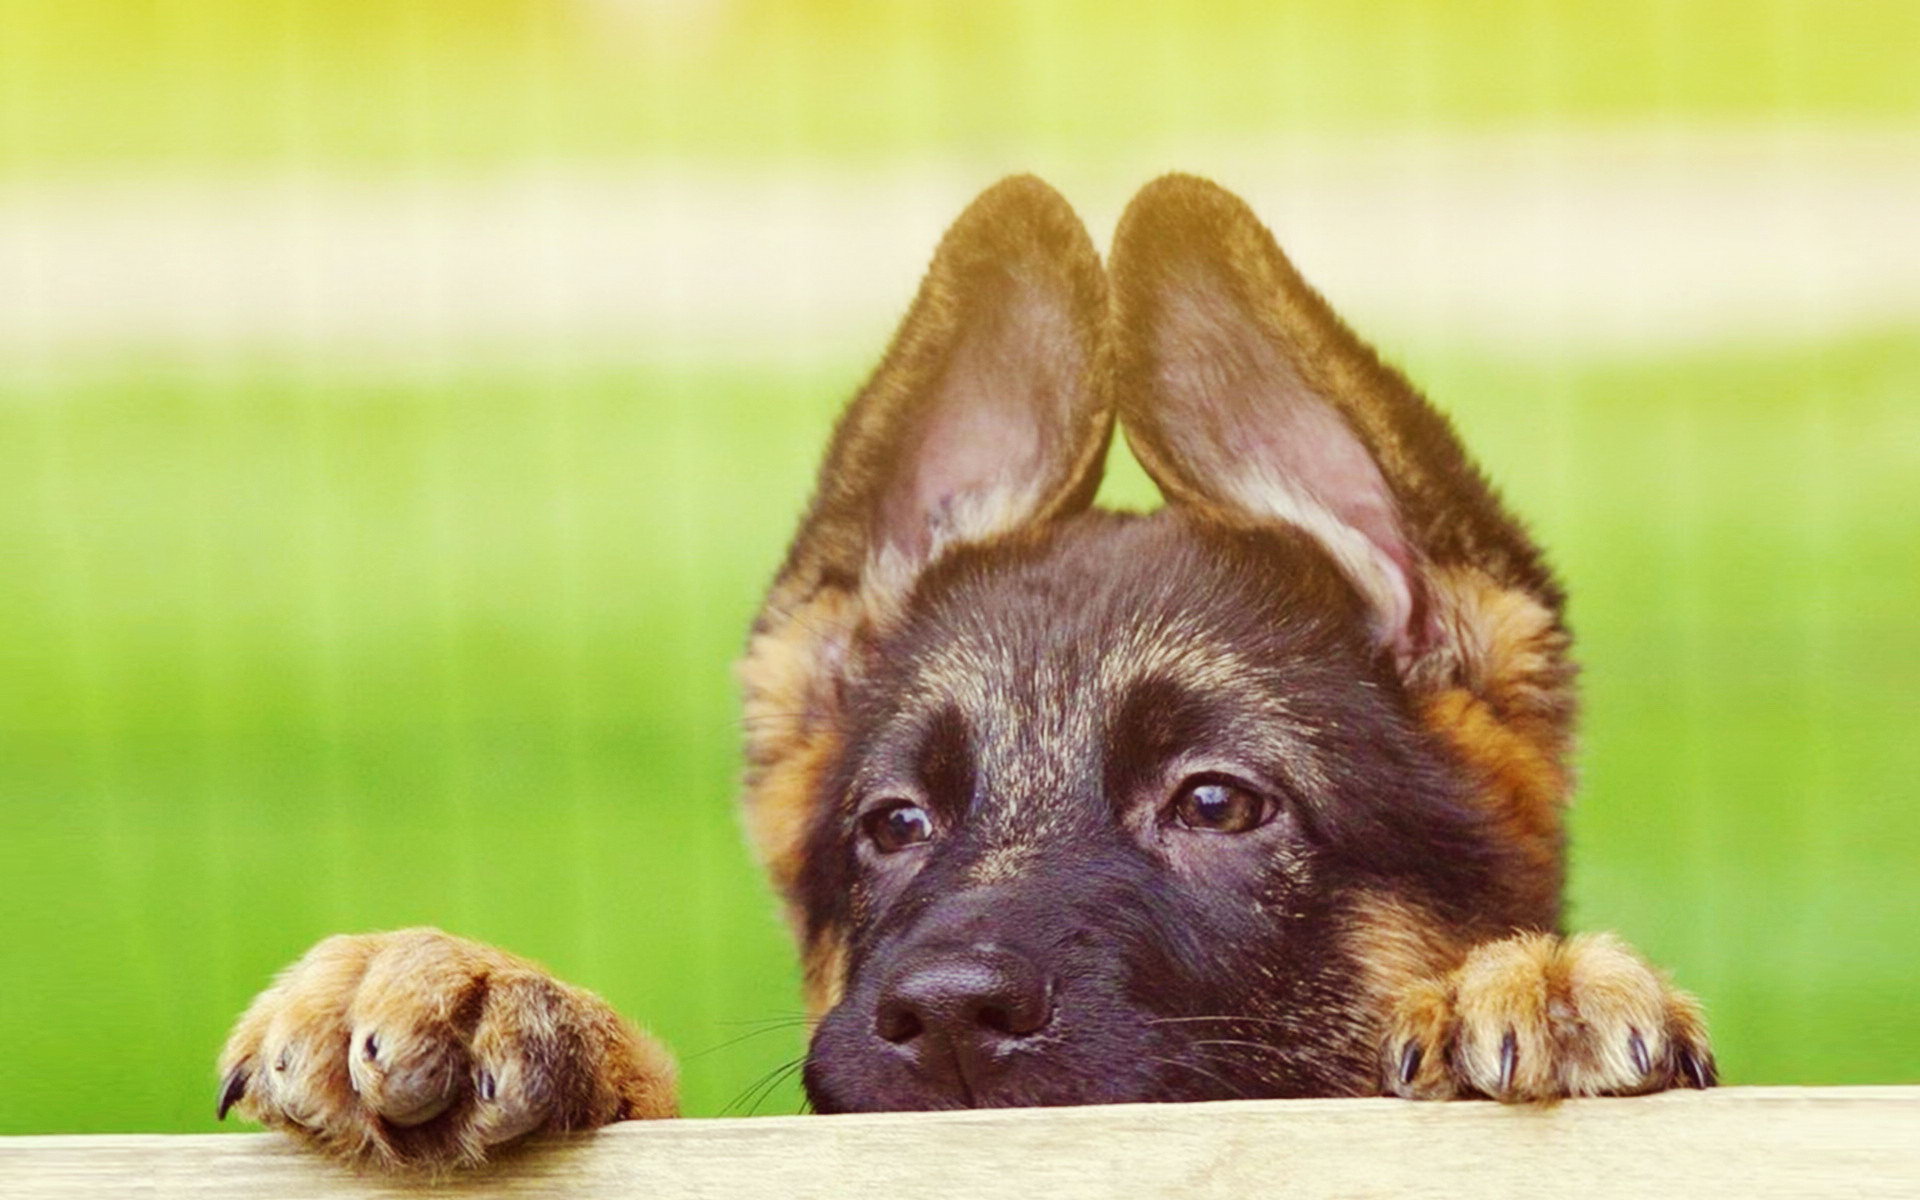 Cute German Shepherd Puppies - Wallpaper, High Definition, High Quality